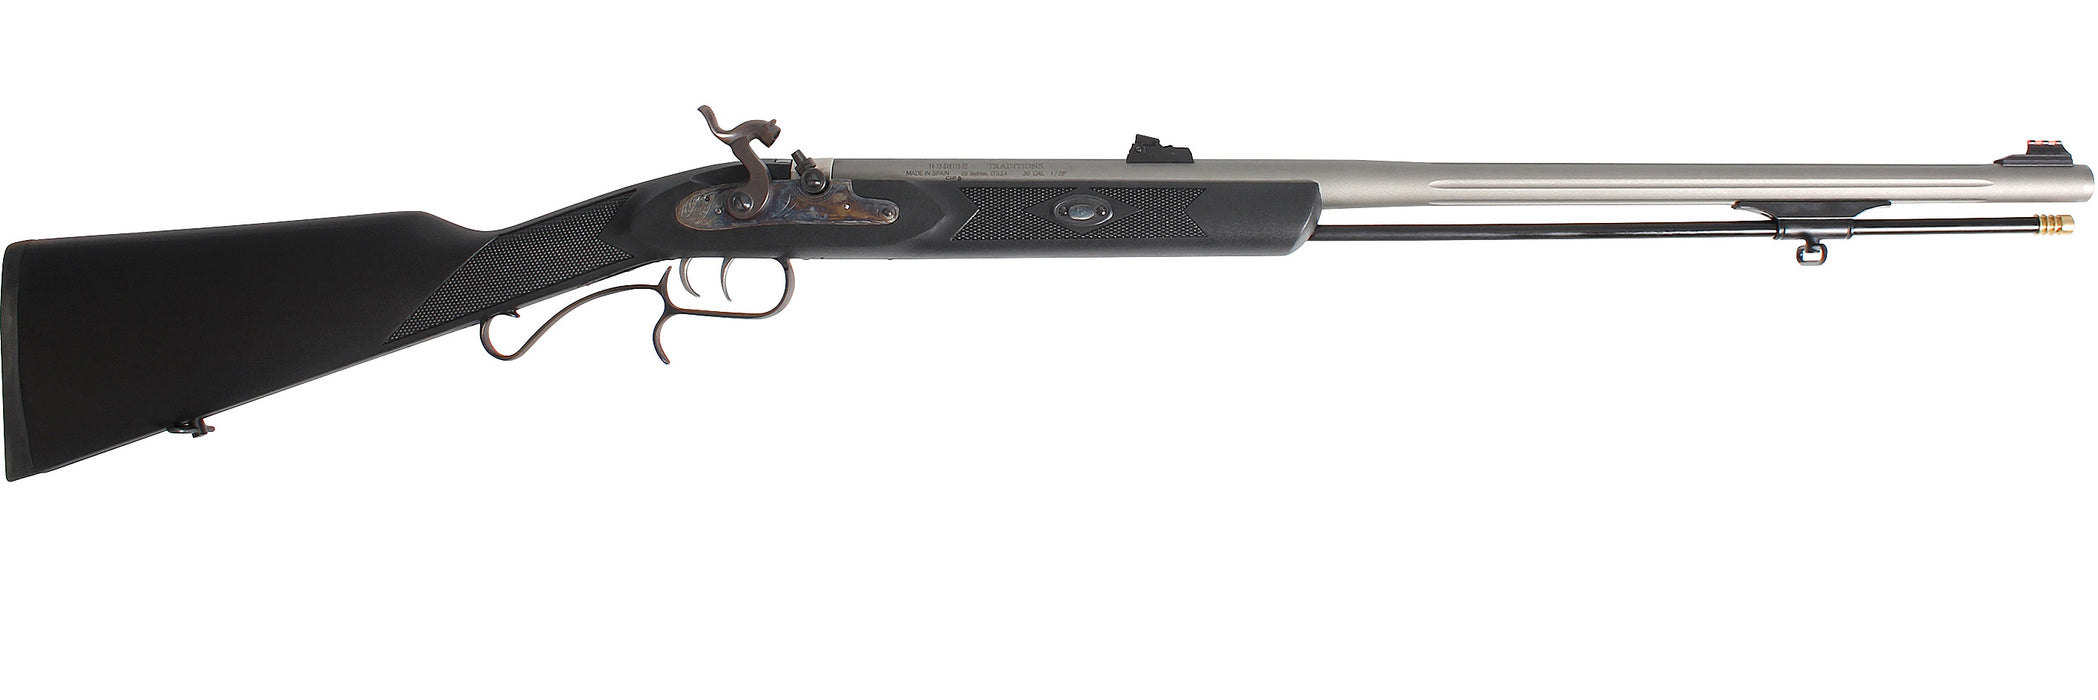  Black Powder Muzzleloading Accessories Flintlock Rifle